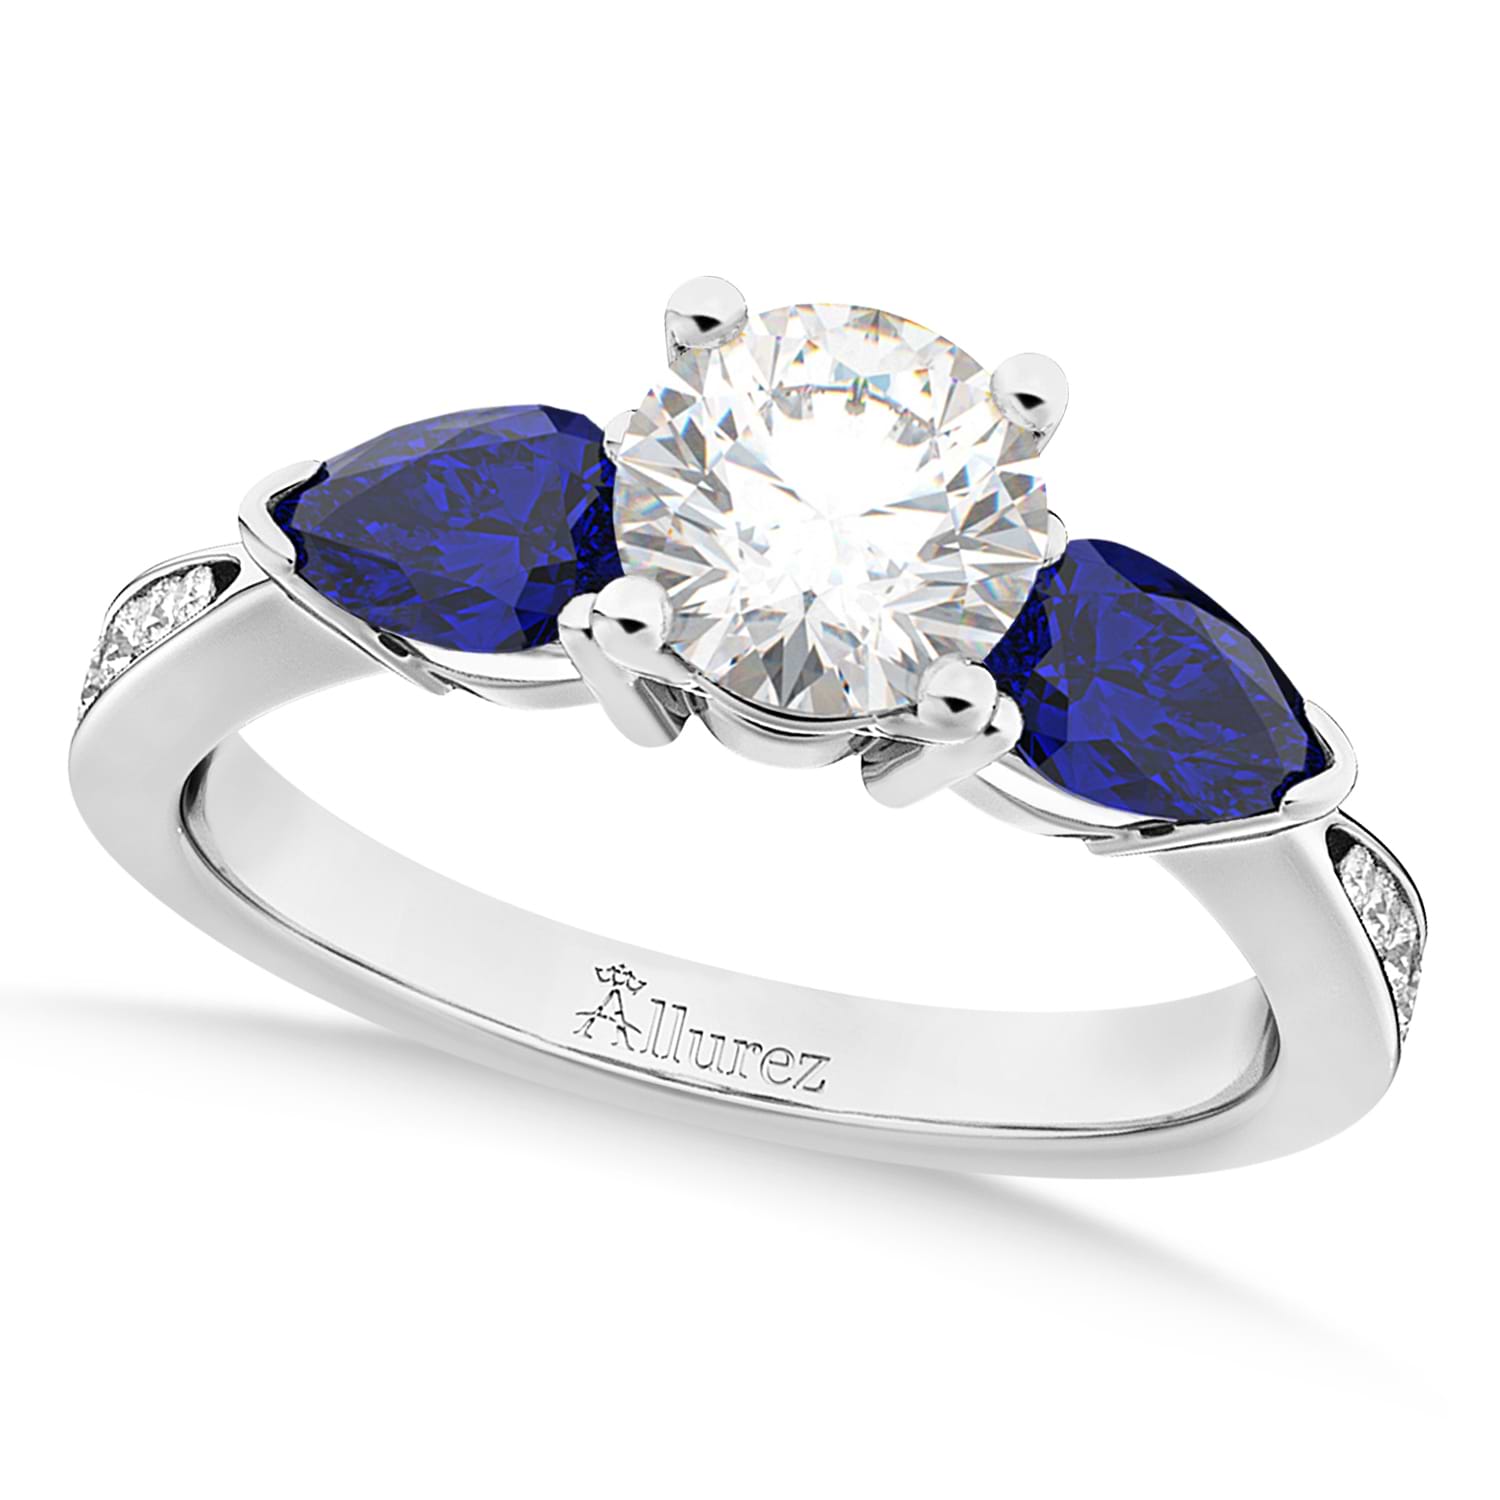 Round Diamond & Pear Blue Sapphire Engagement Ring in Palladium (1.29ct)